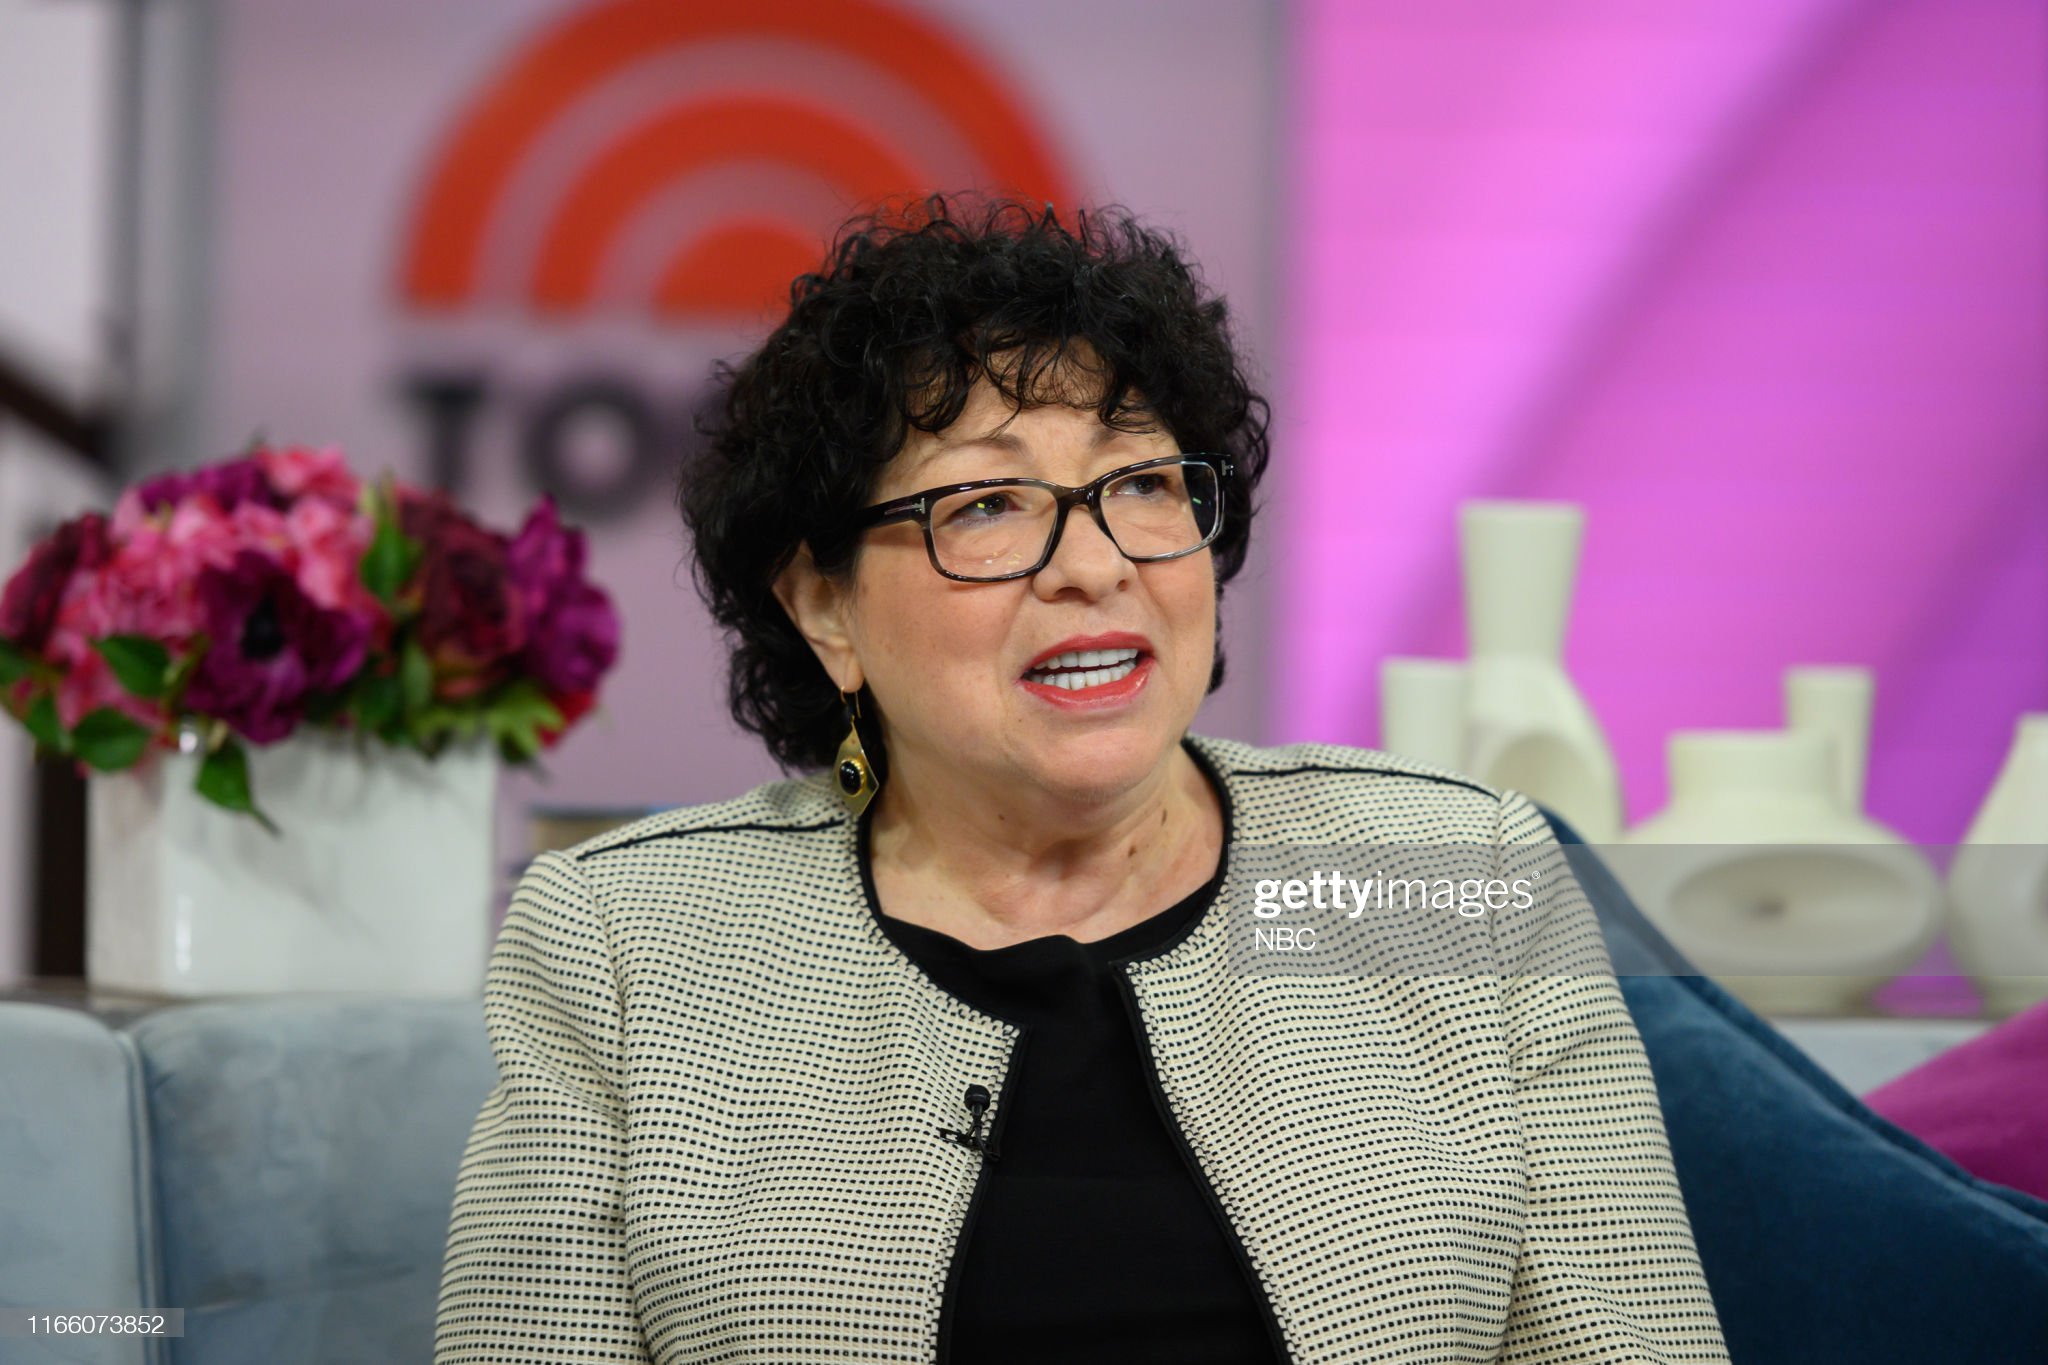 Who is Sonia Sotomayor's husband? ABTC